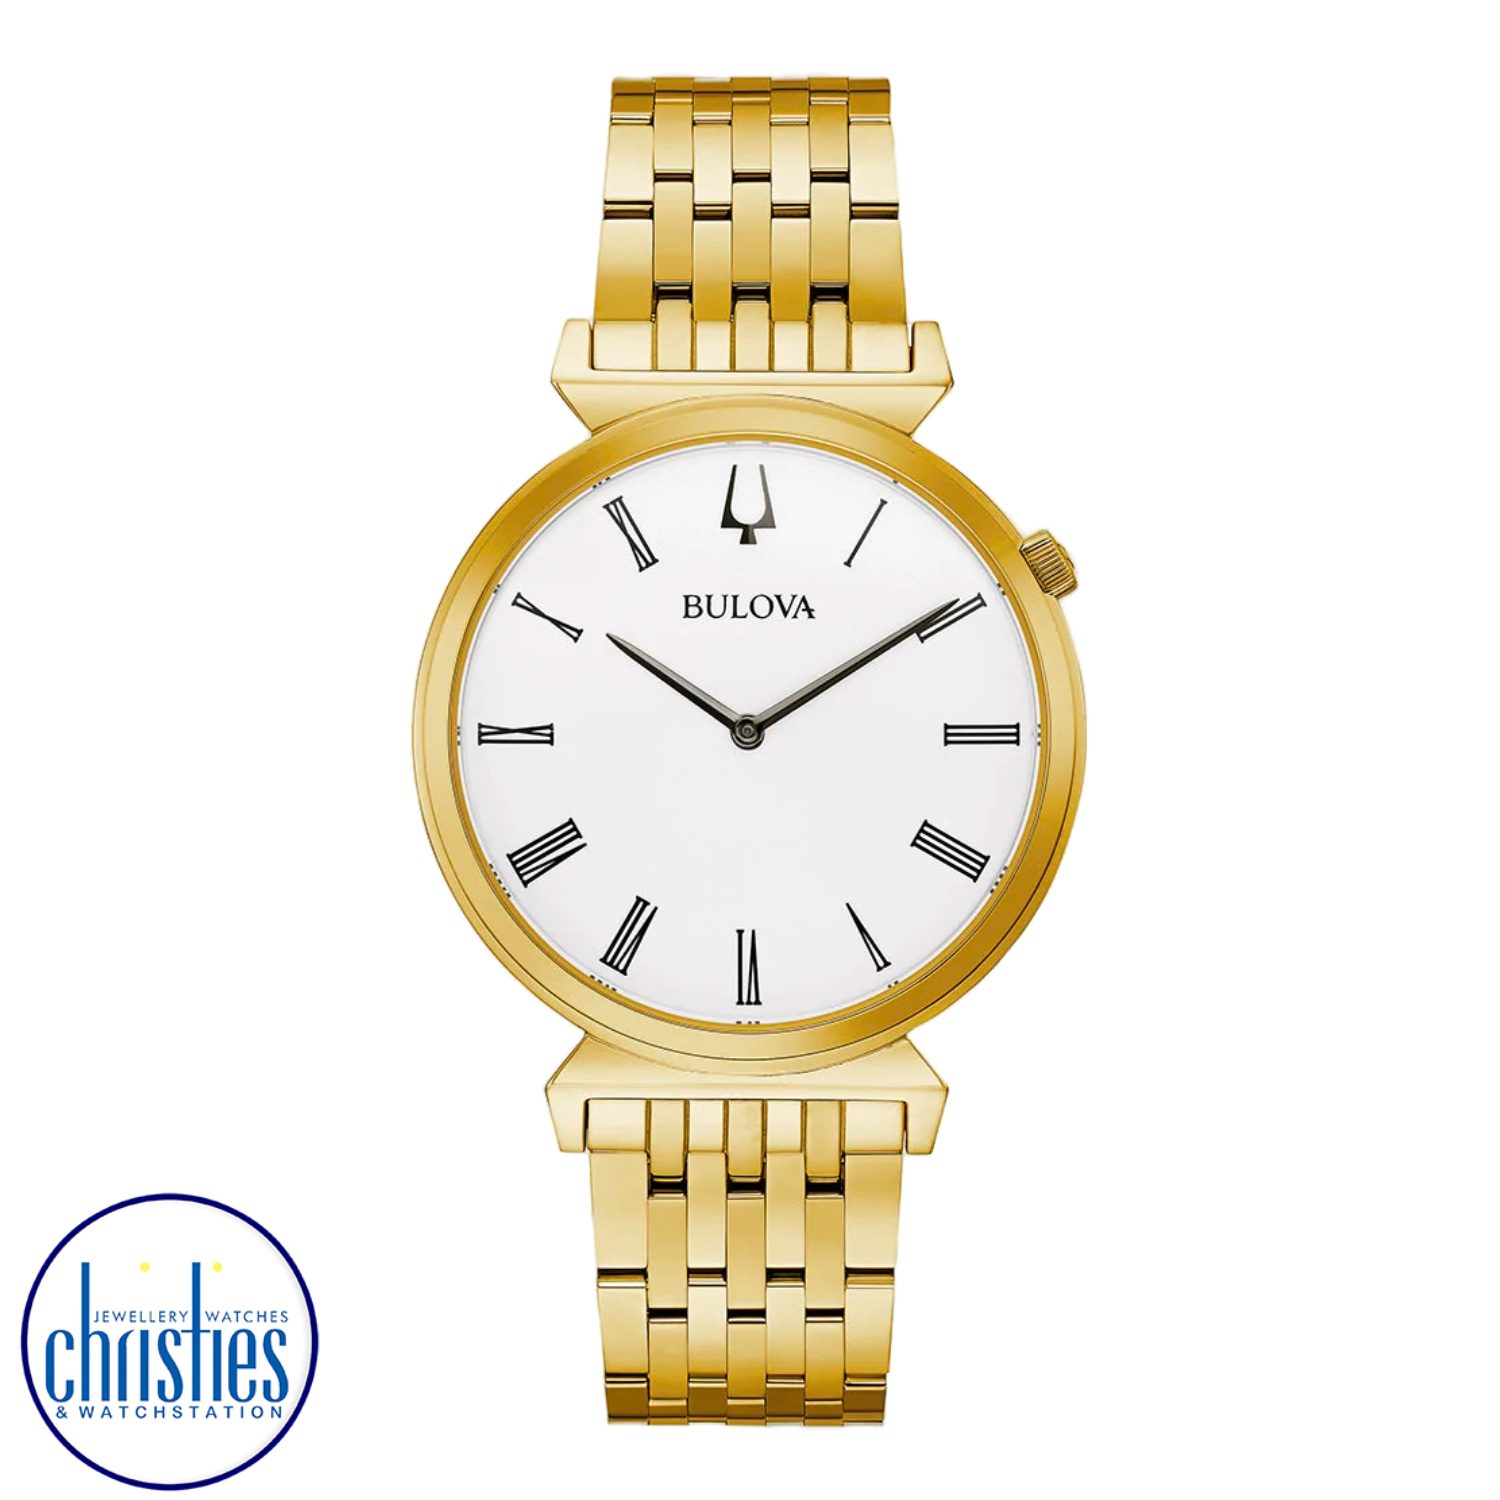 98A233 Bulova Men's Classic Watch. The Bulova 98A233 Classic Regatta watch combines vintage elegance with modern design.